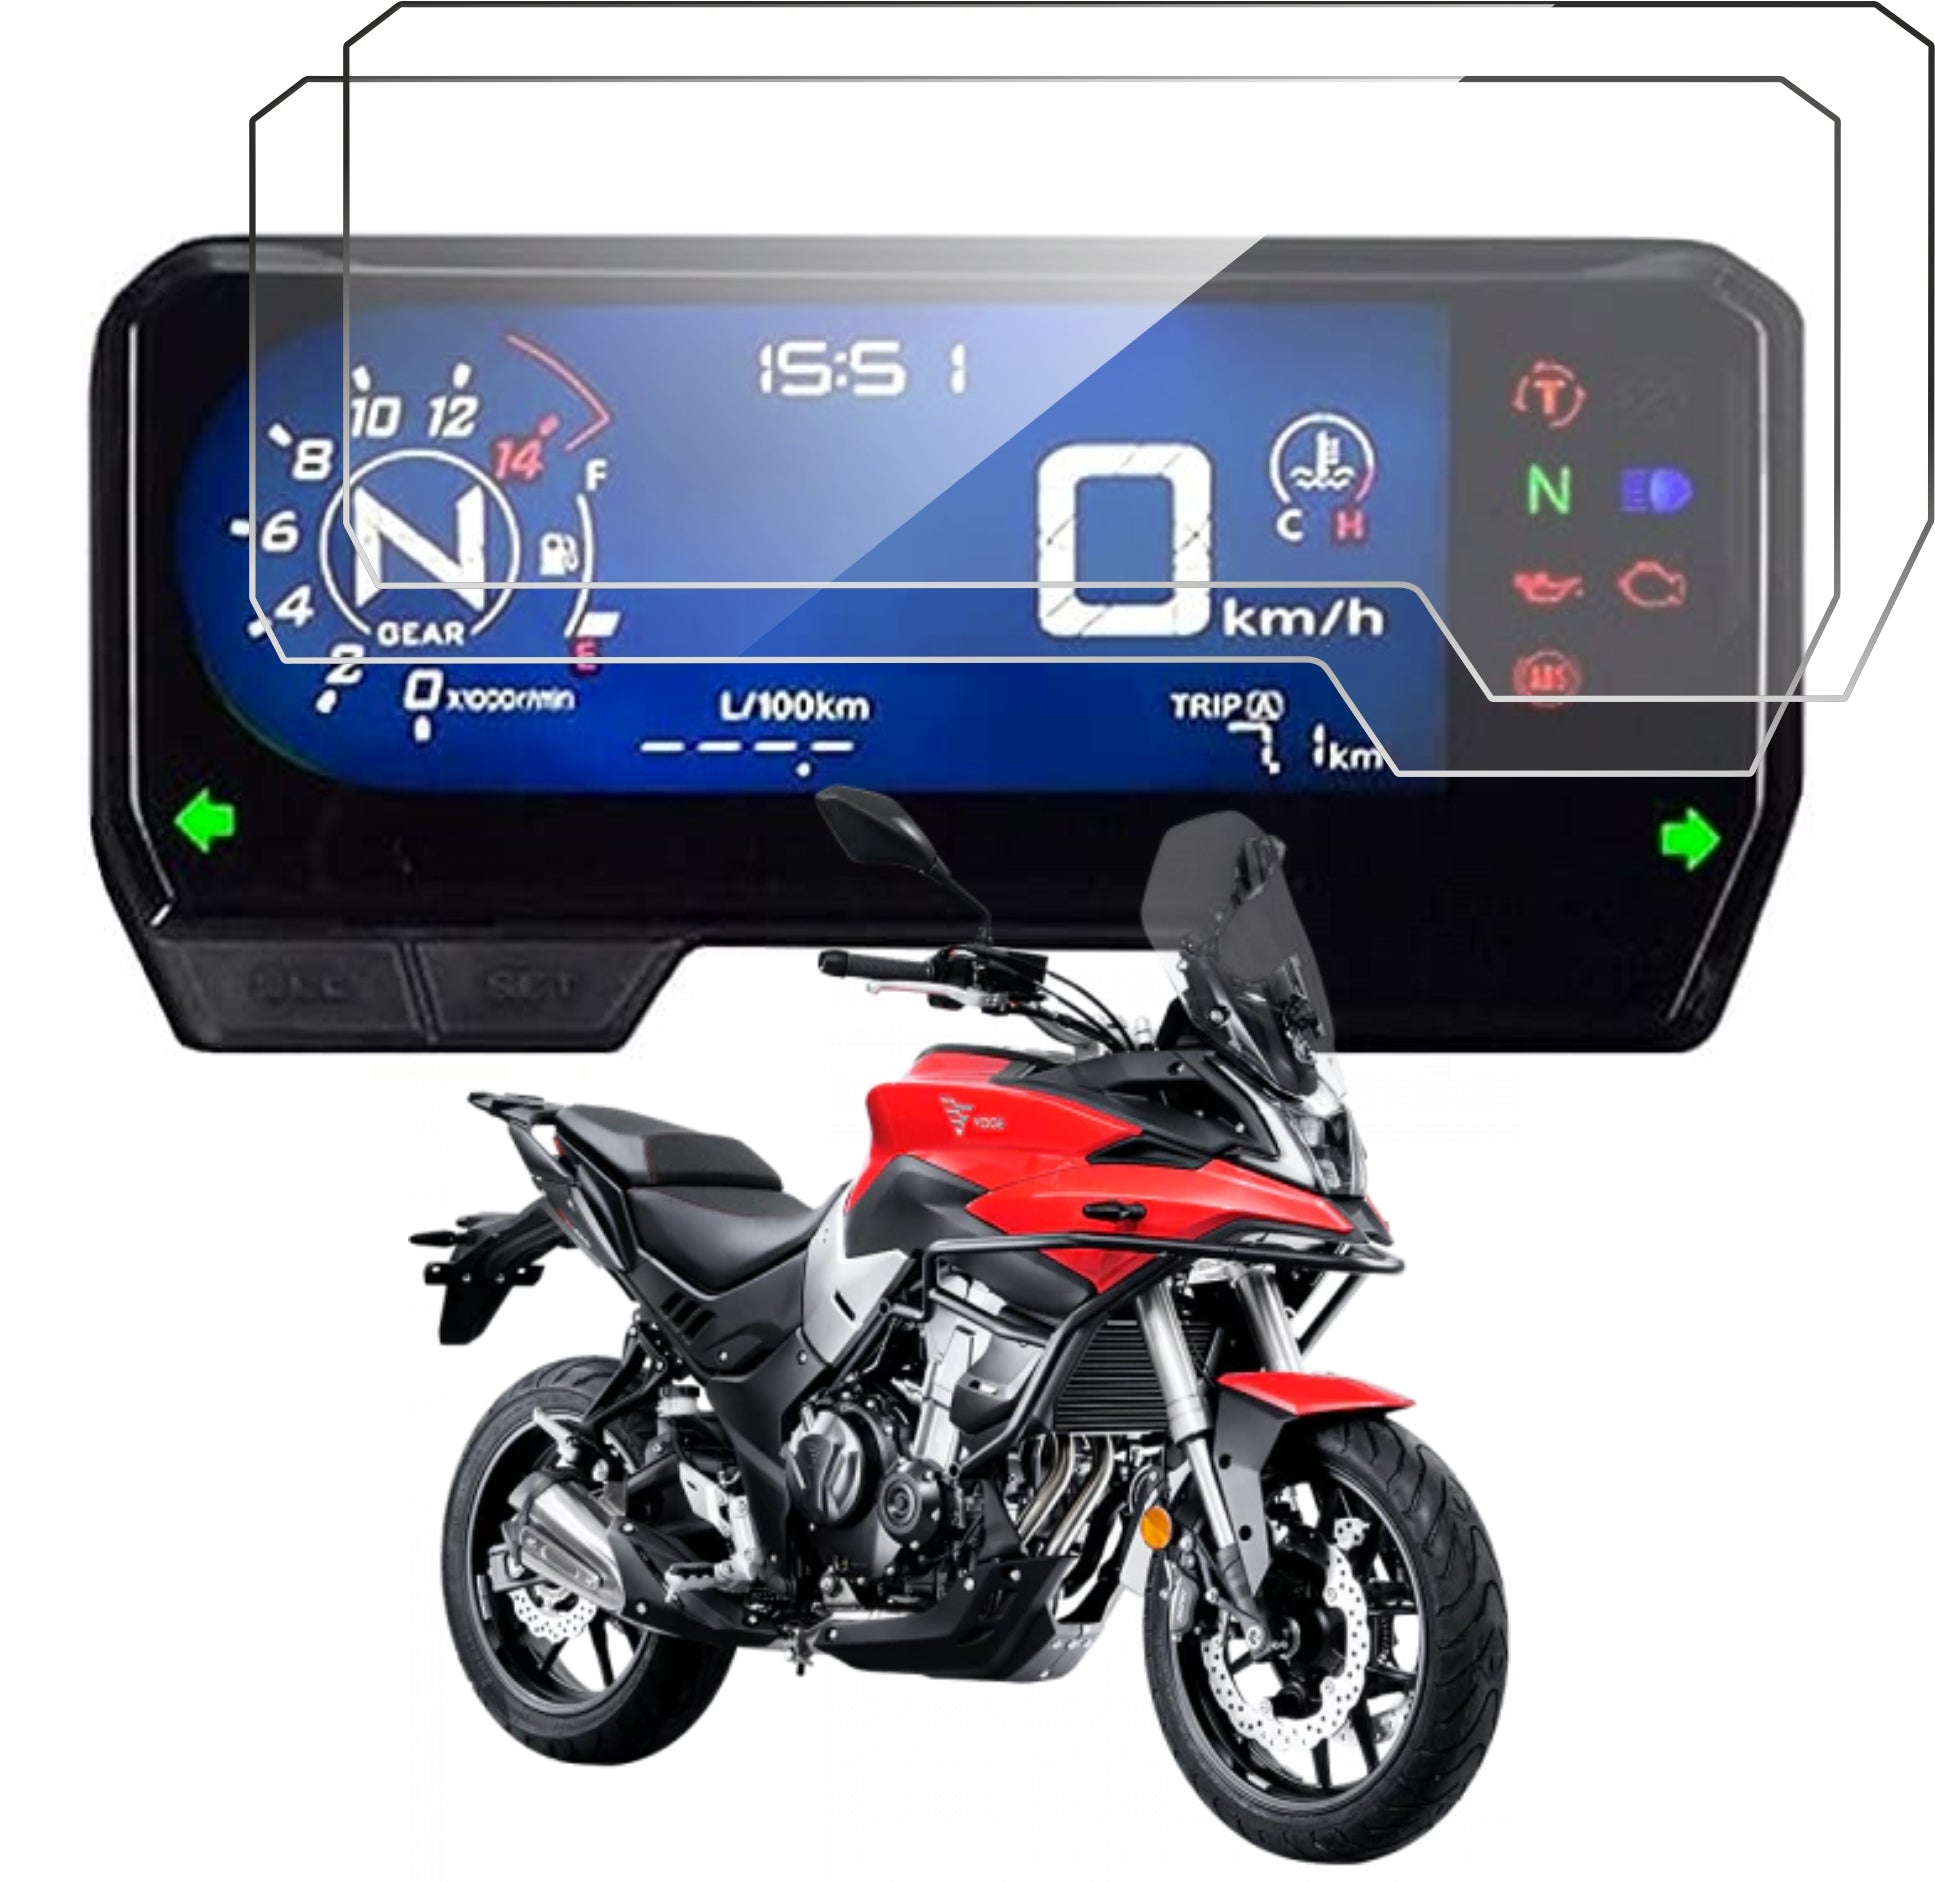 Honda CB 500X | CB 650R | Accessories 2019-21 Motorcycle Digital Cluster Screen Guard -HONDA_CB-2